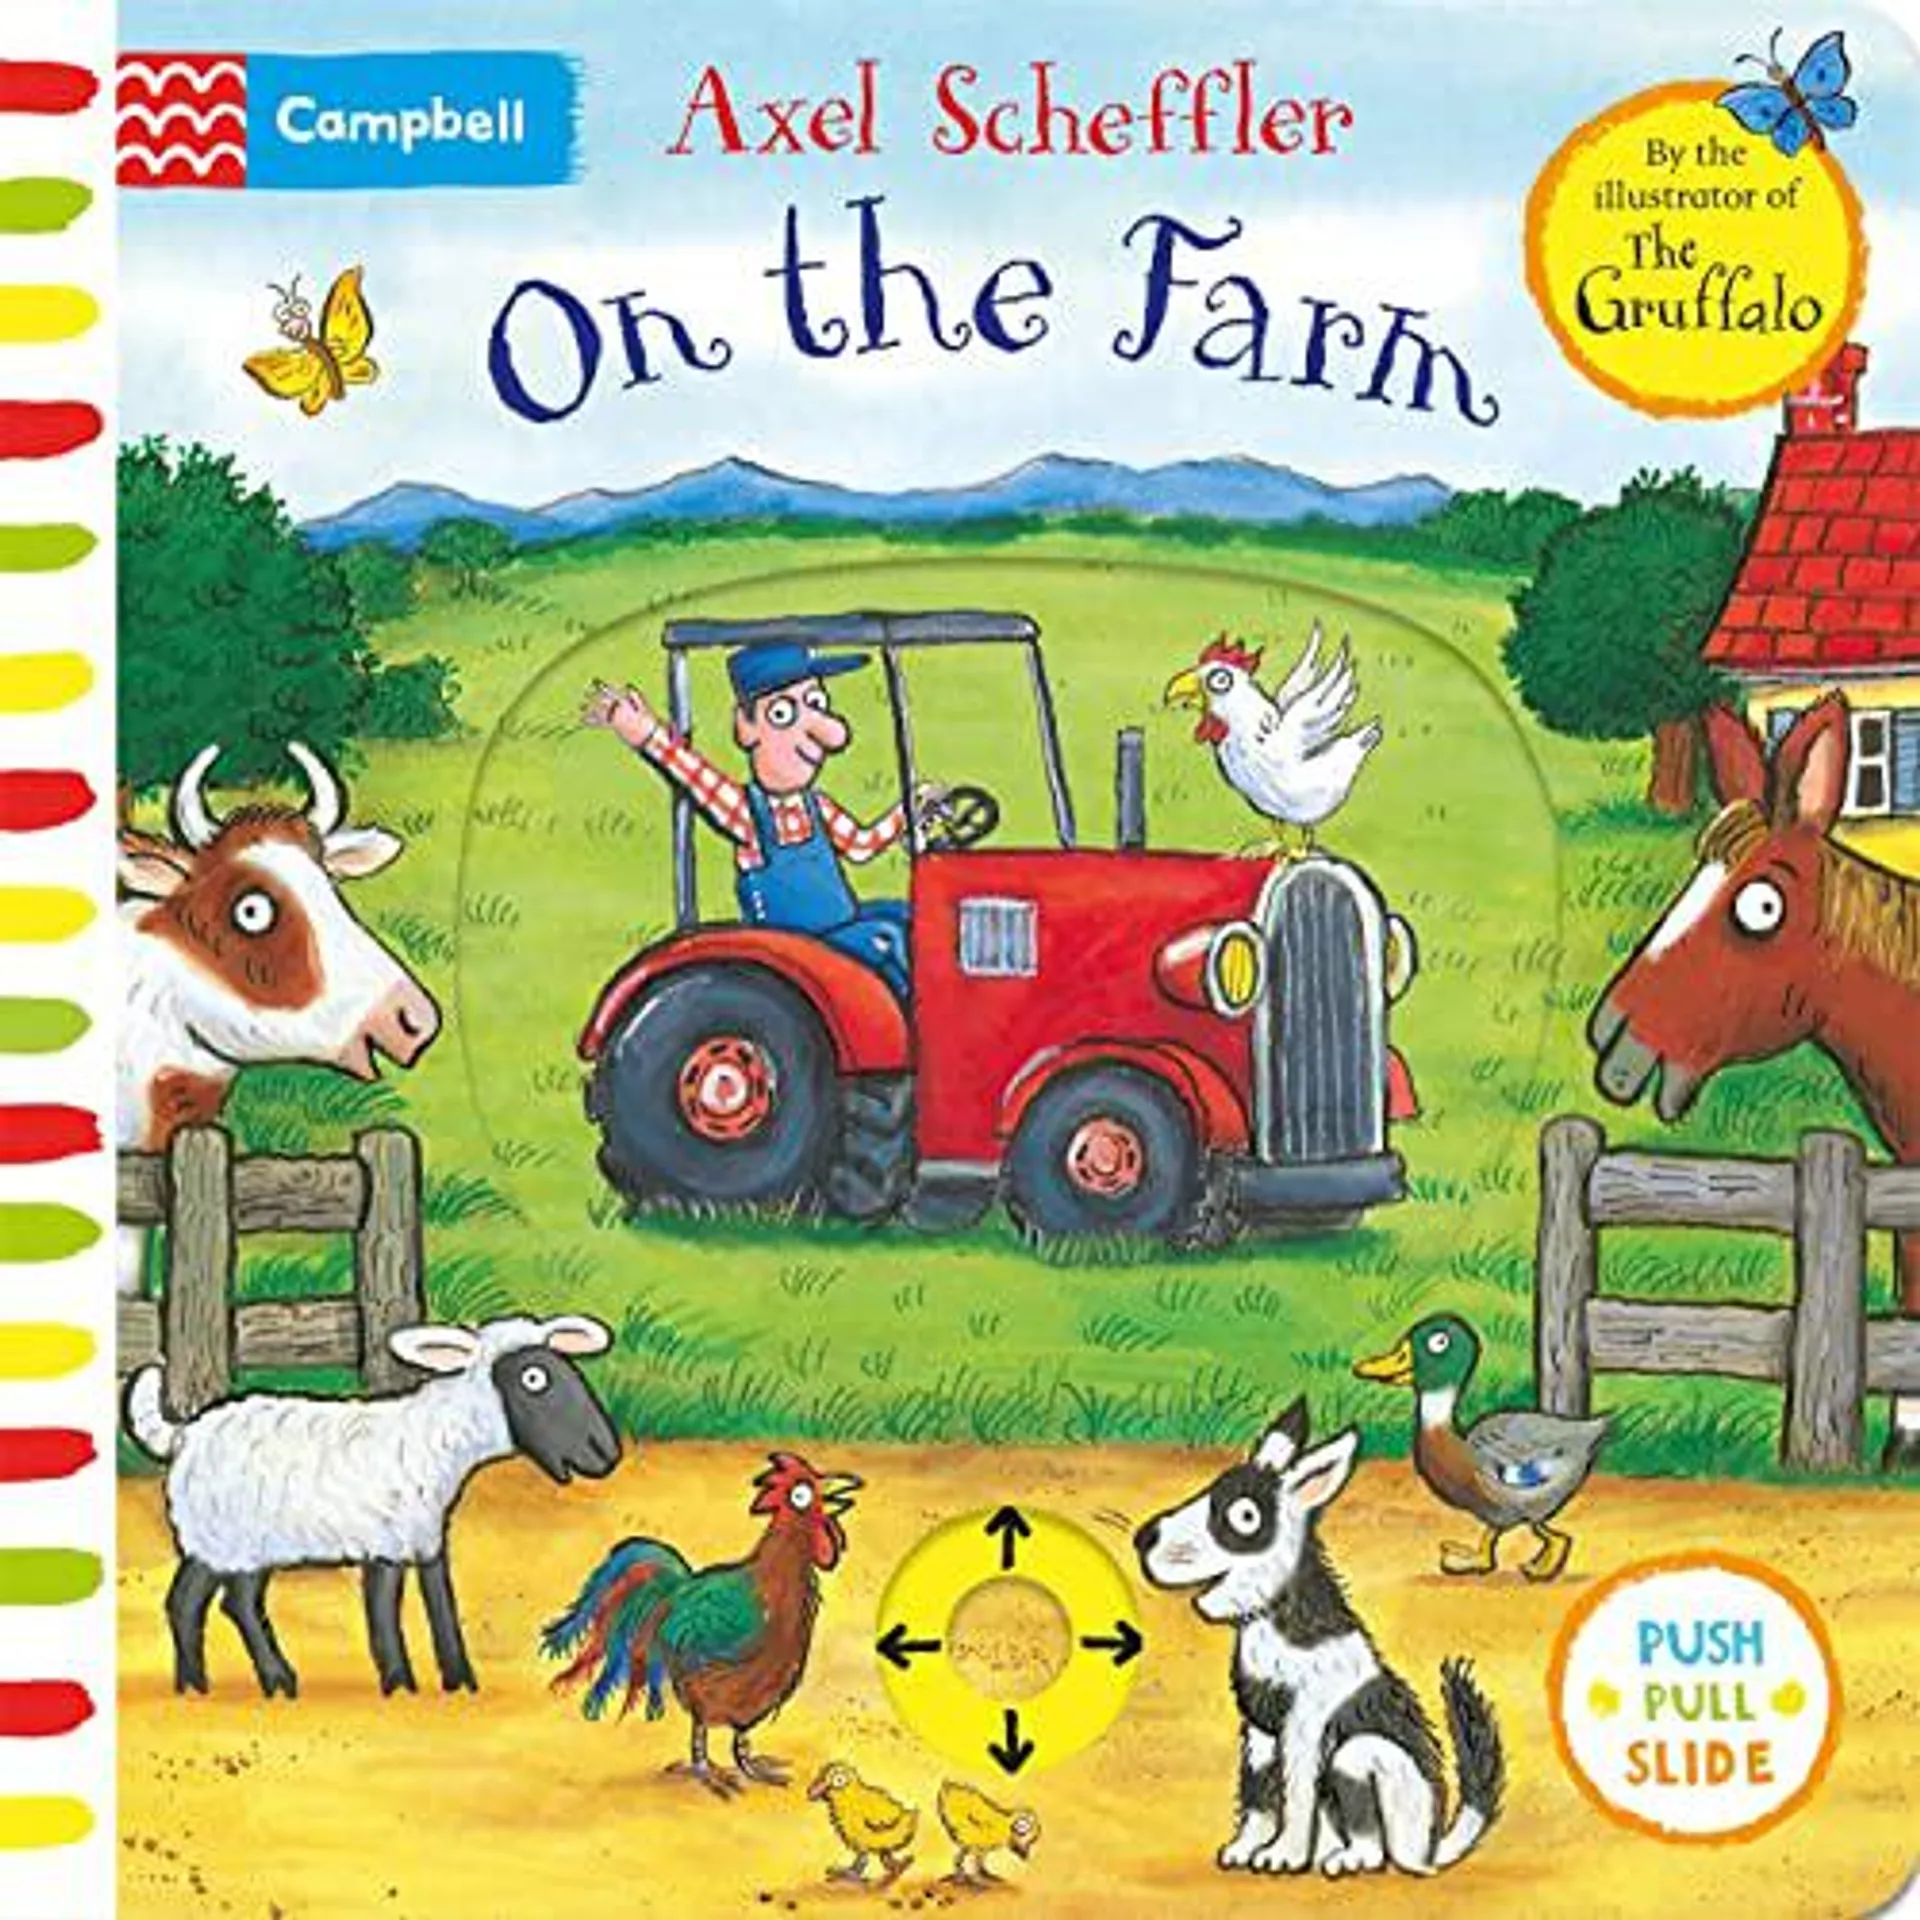 Axel Scheffler On the Farm by Axel Scheffler